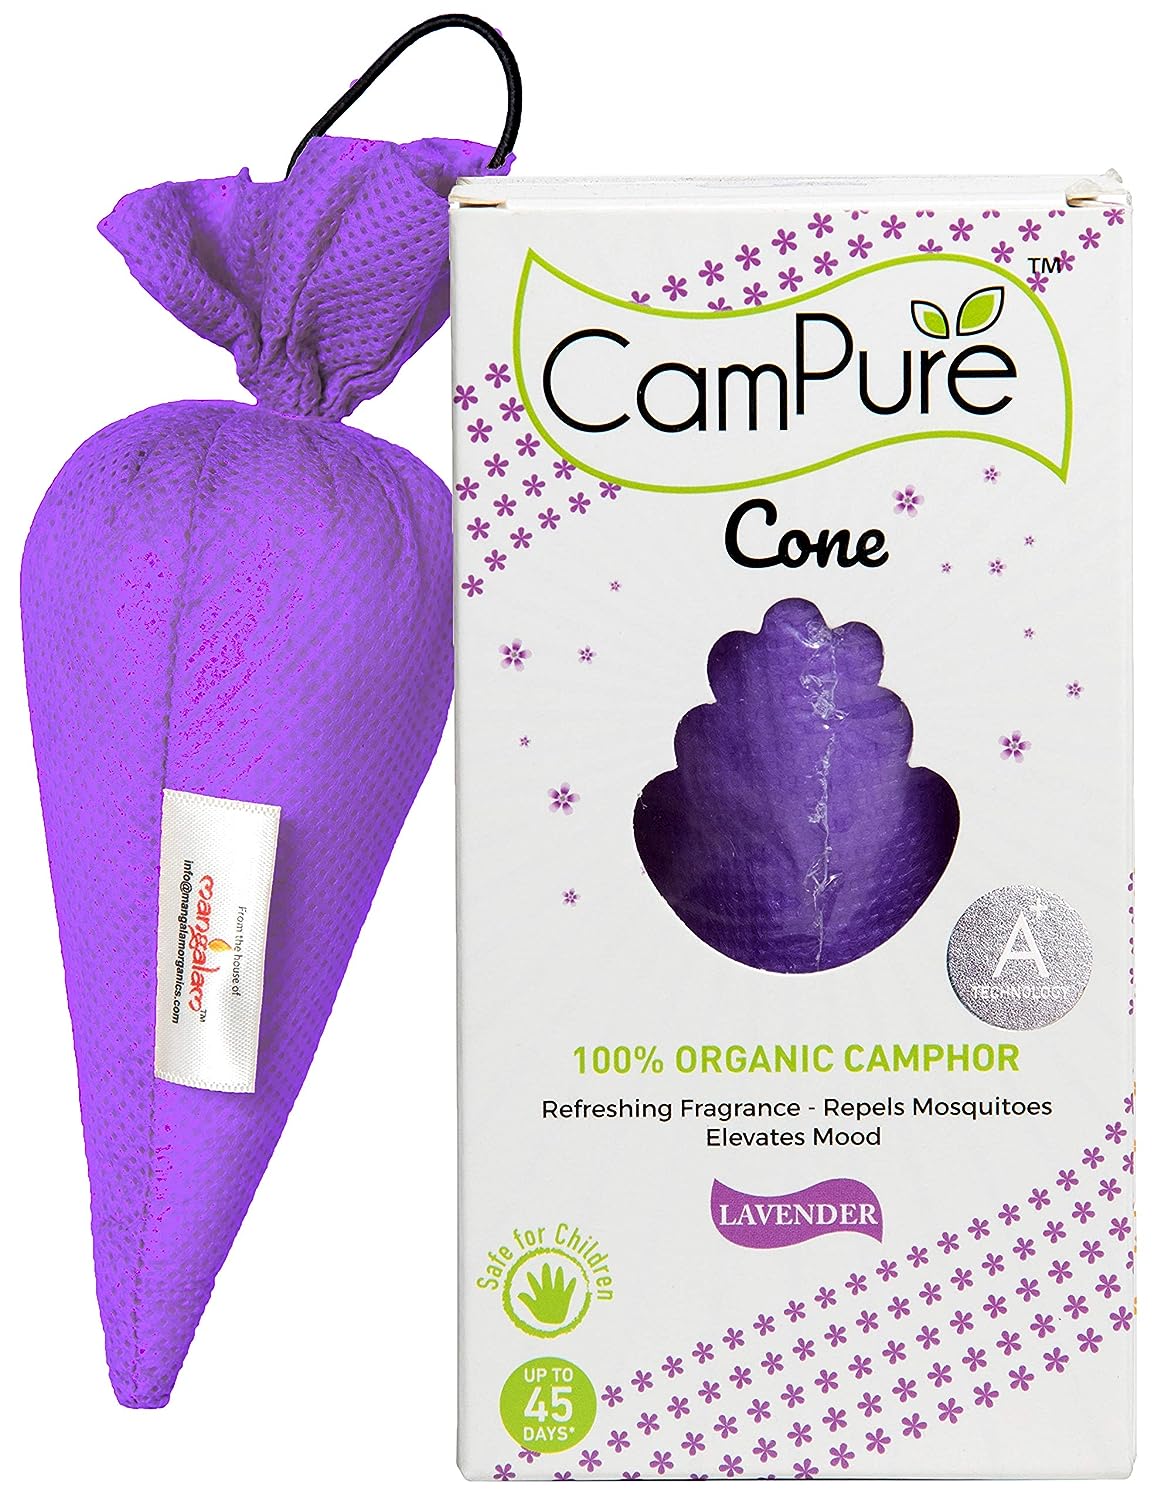 Mangalam CamPure-Camphor Cone (Lavender) - Room, Car and Air Freshener & Mosquito Repellent